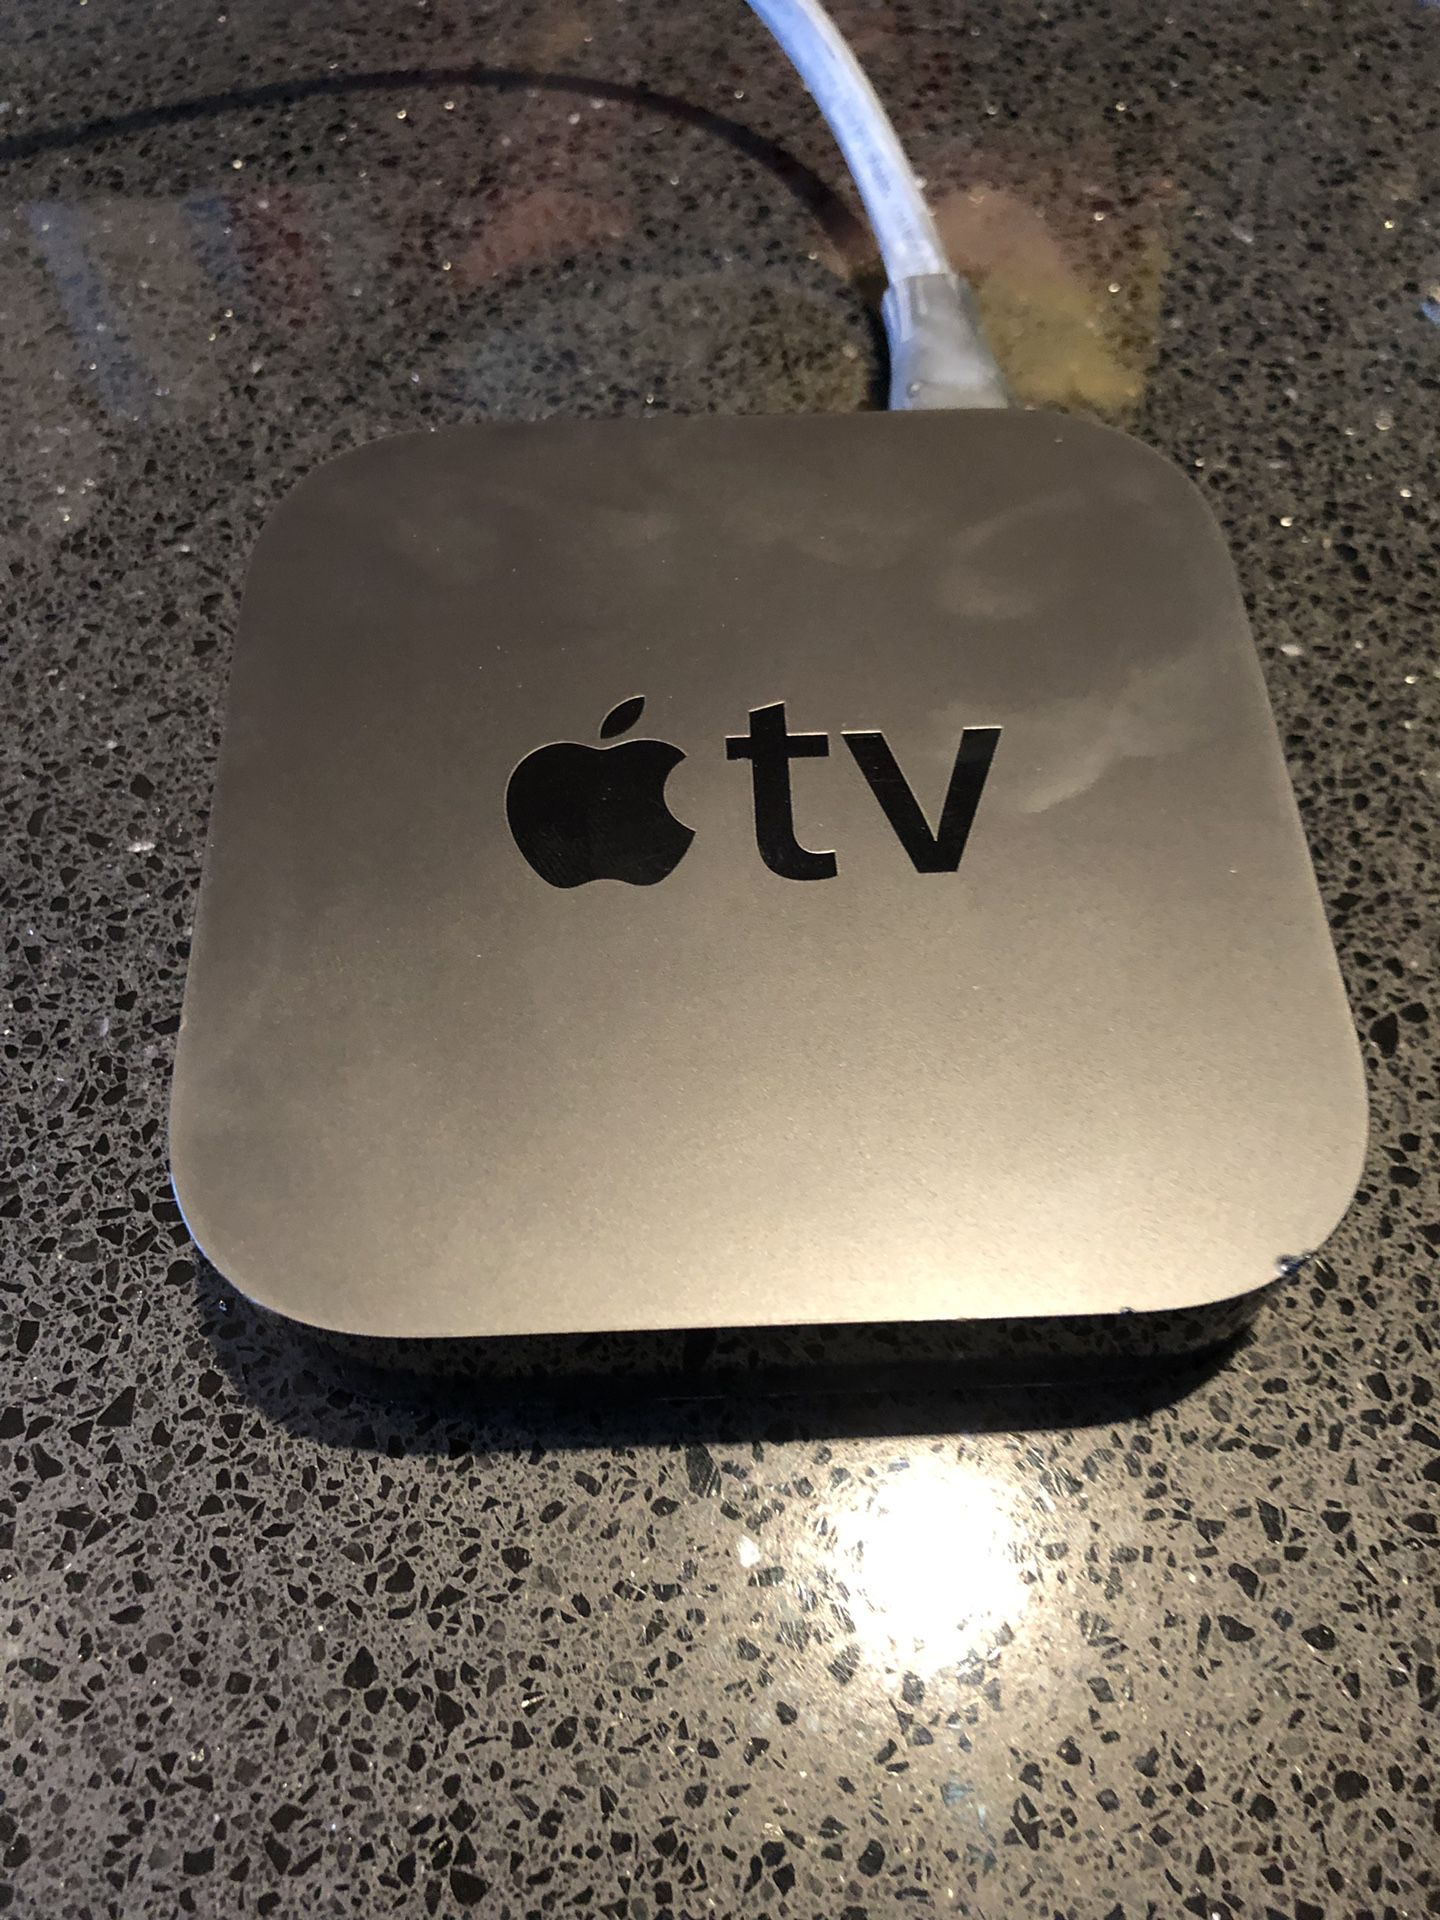 Apple TV (2nd generation)